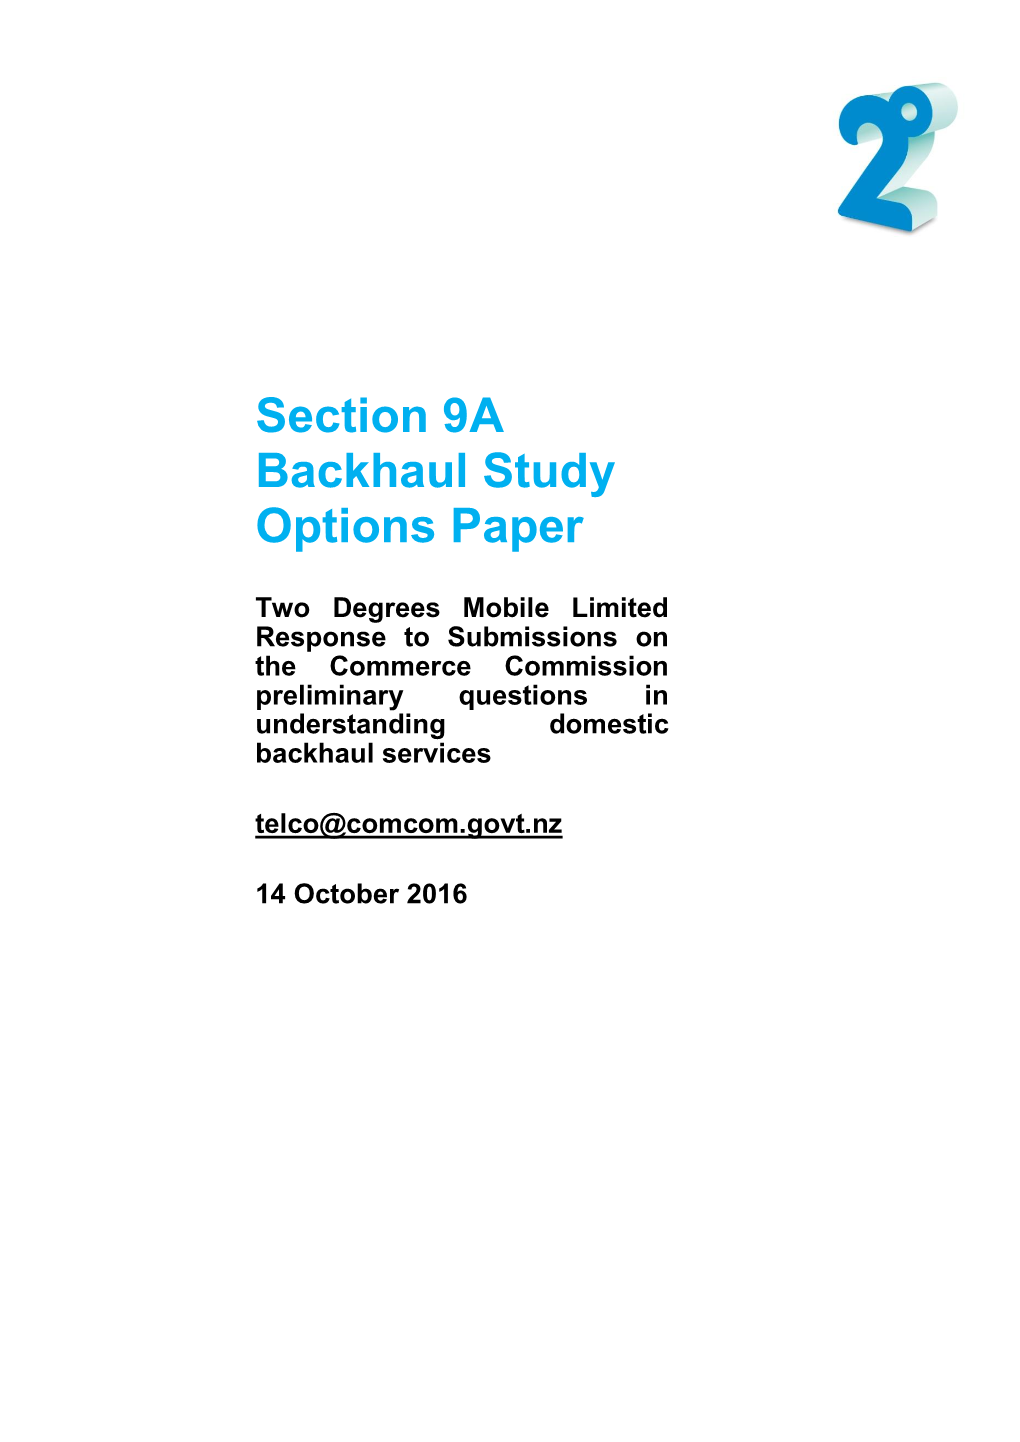 Section 9A Backhaul Study Options Paper